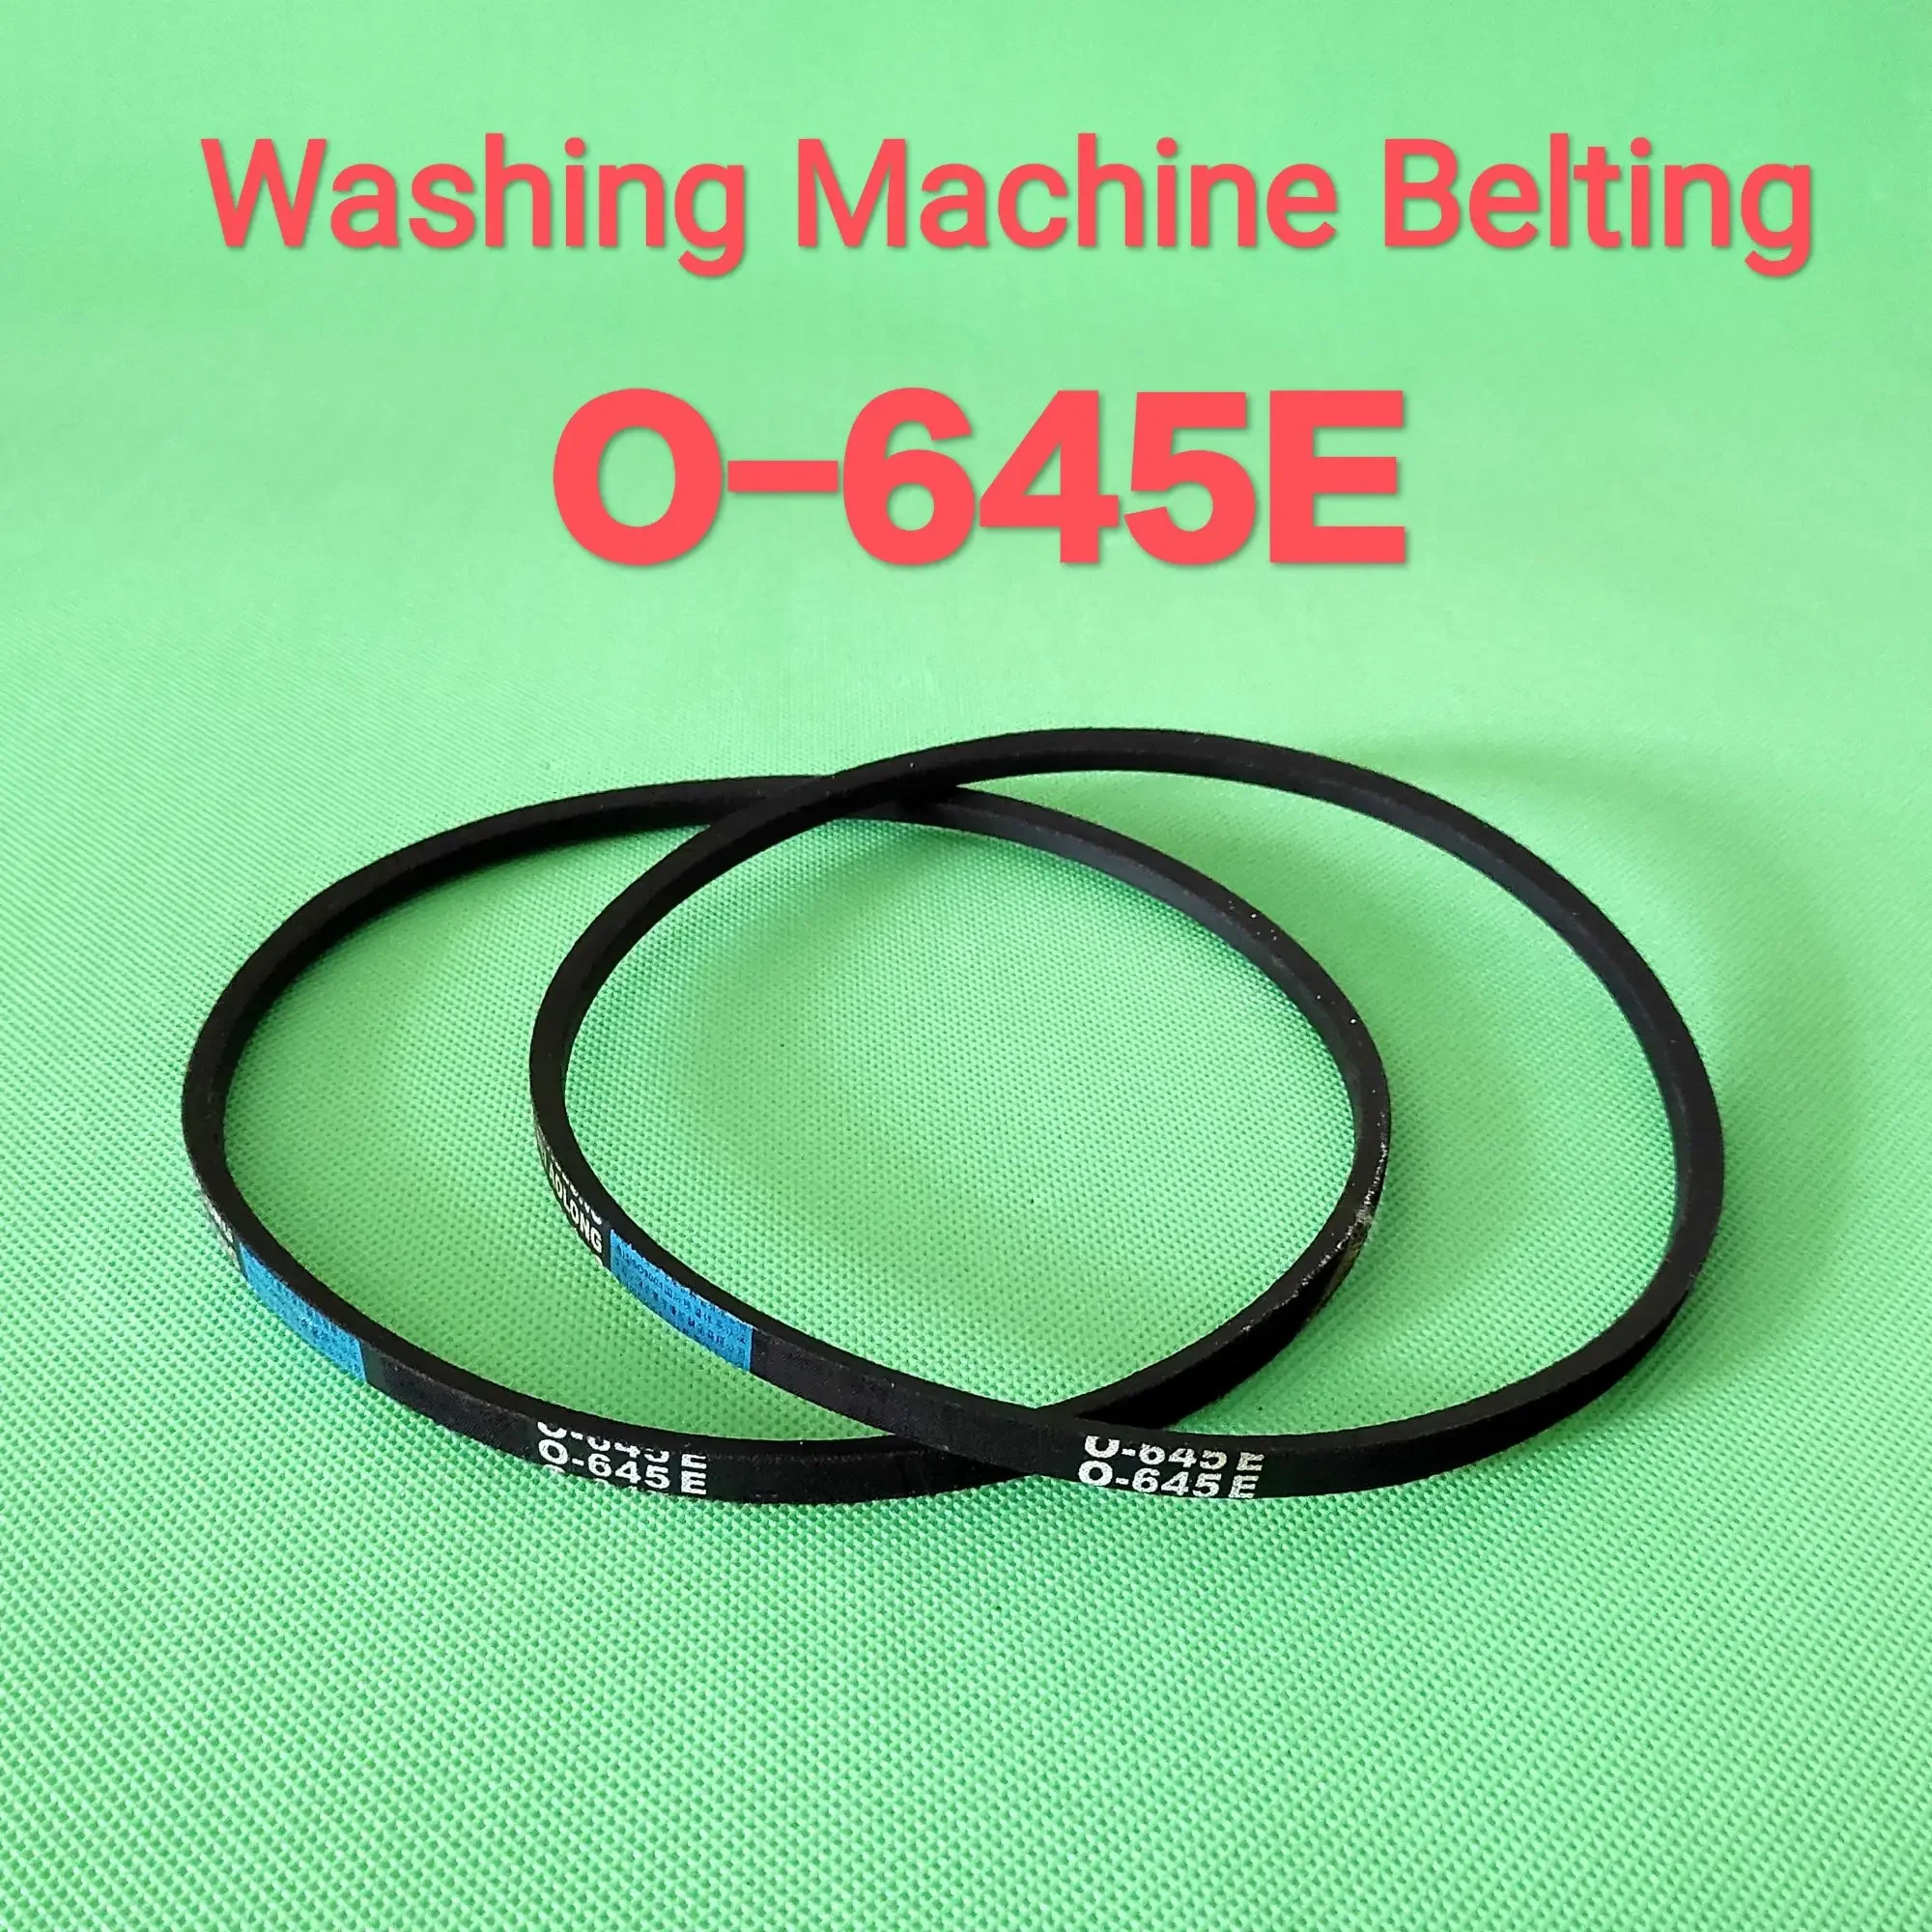 1 Biji O-645E Washing Machine Belting tali mesin basuh